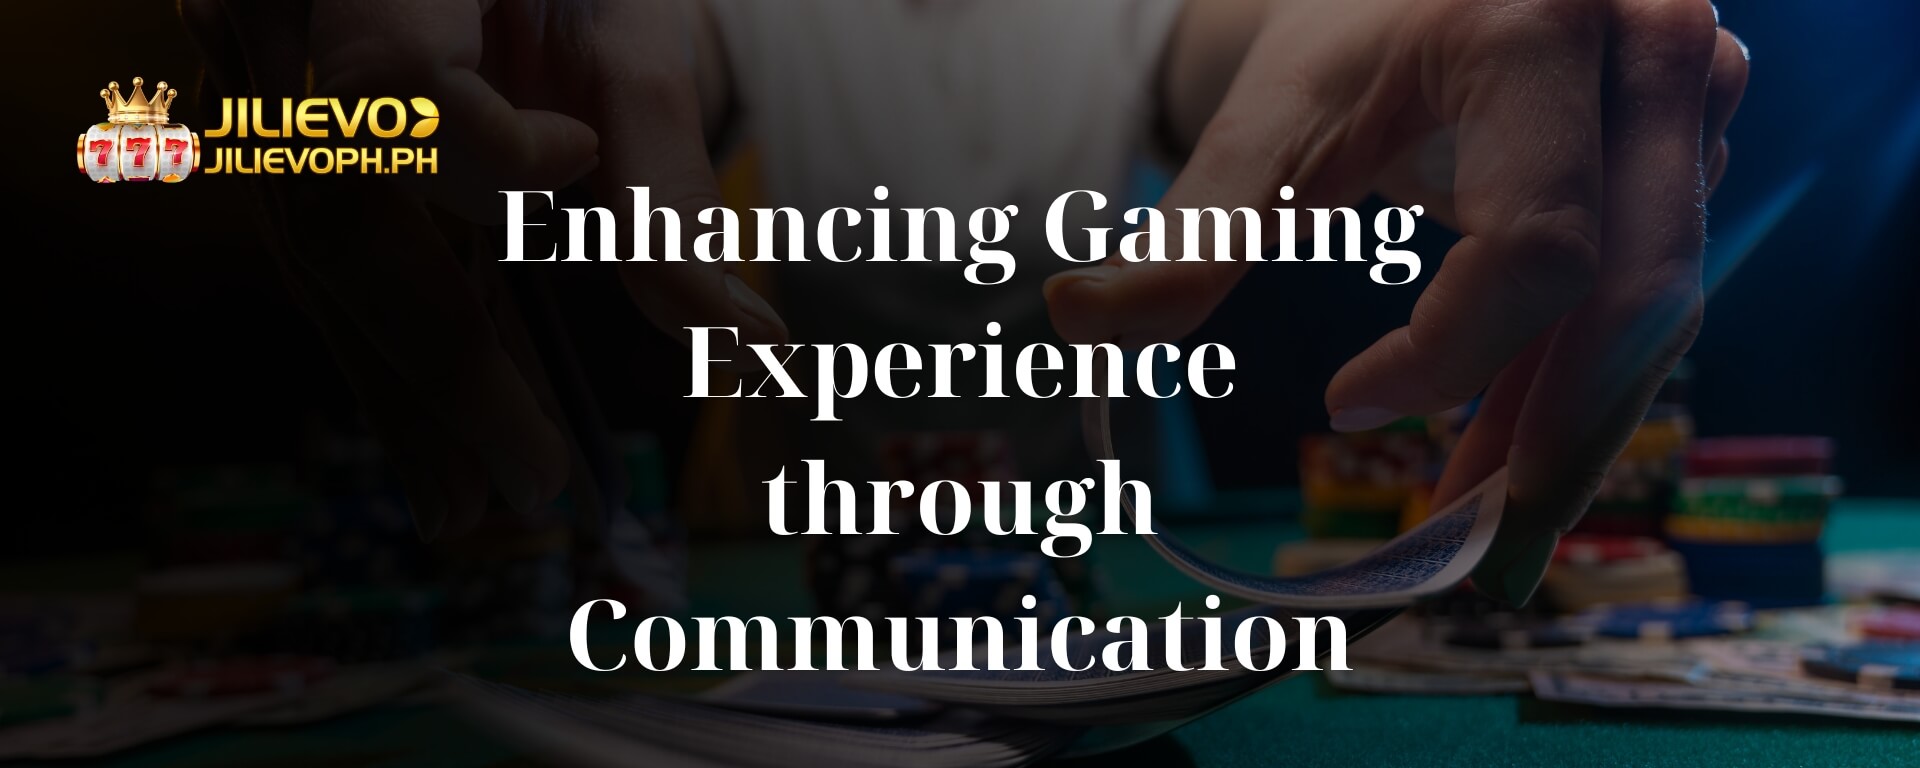 Enhancing Gaming Experience through Communication